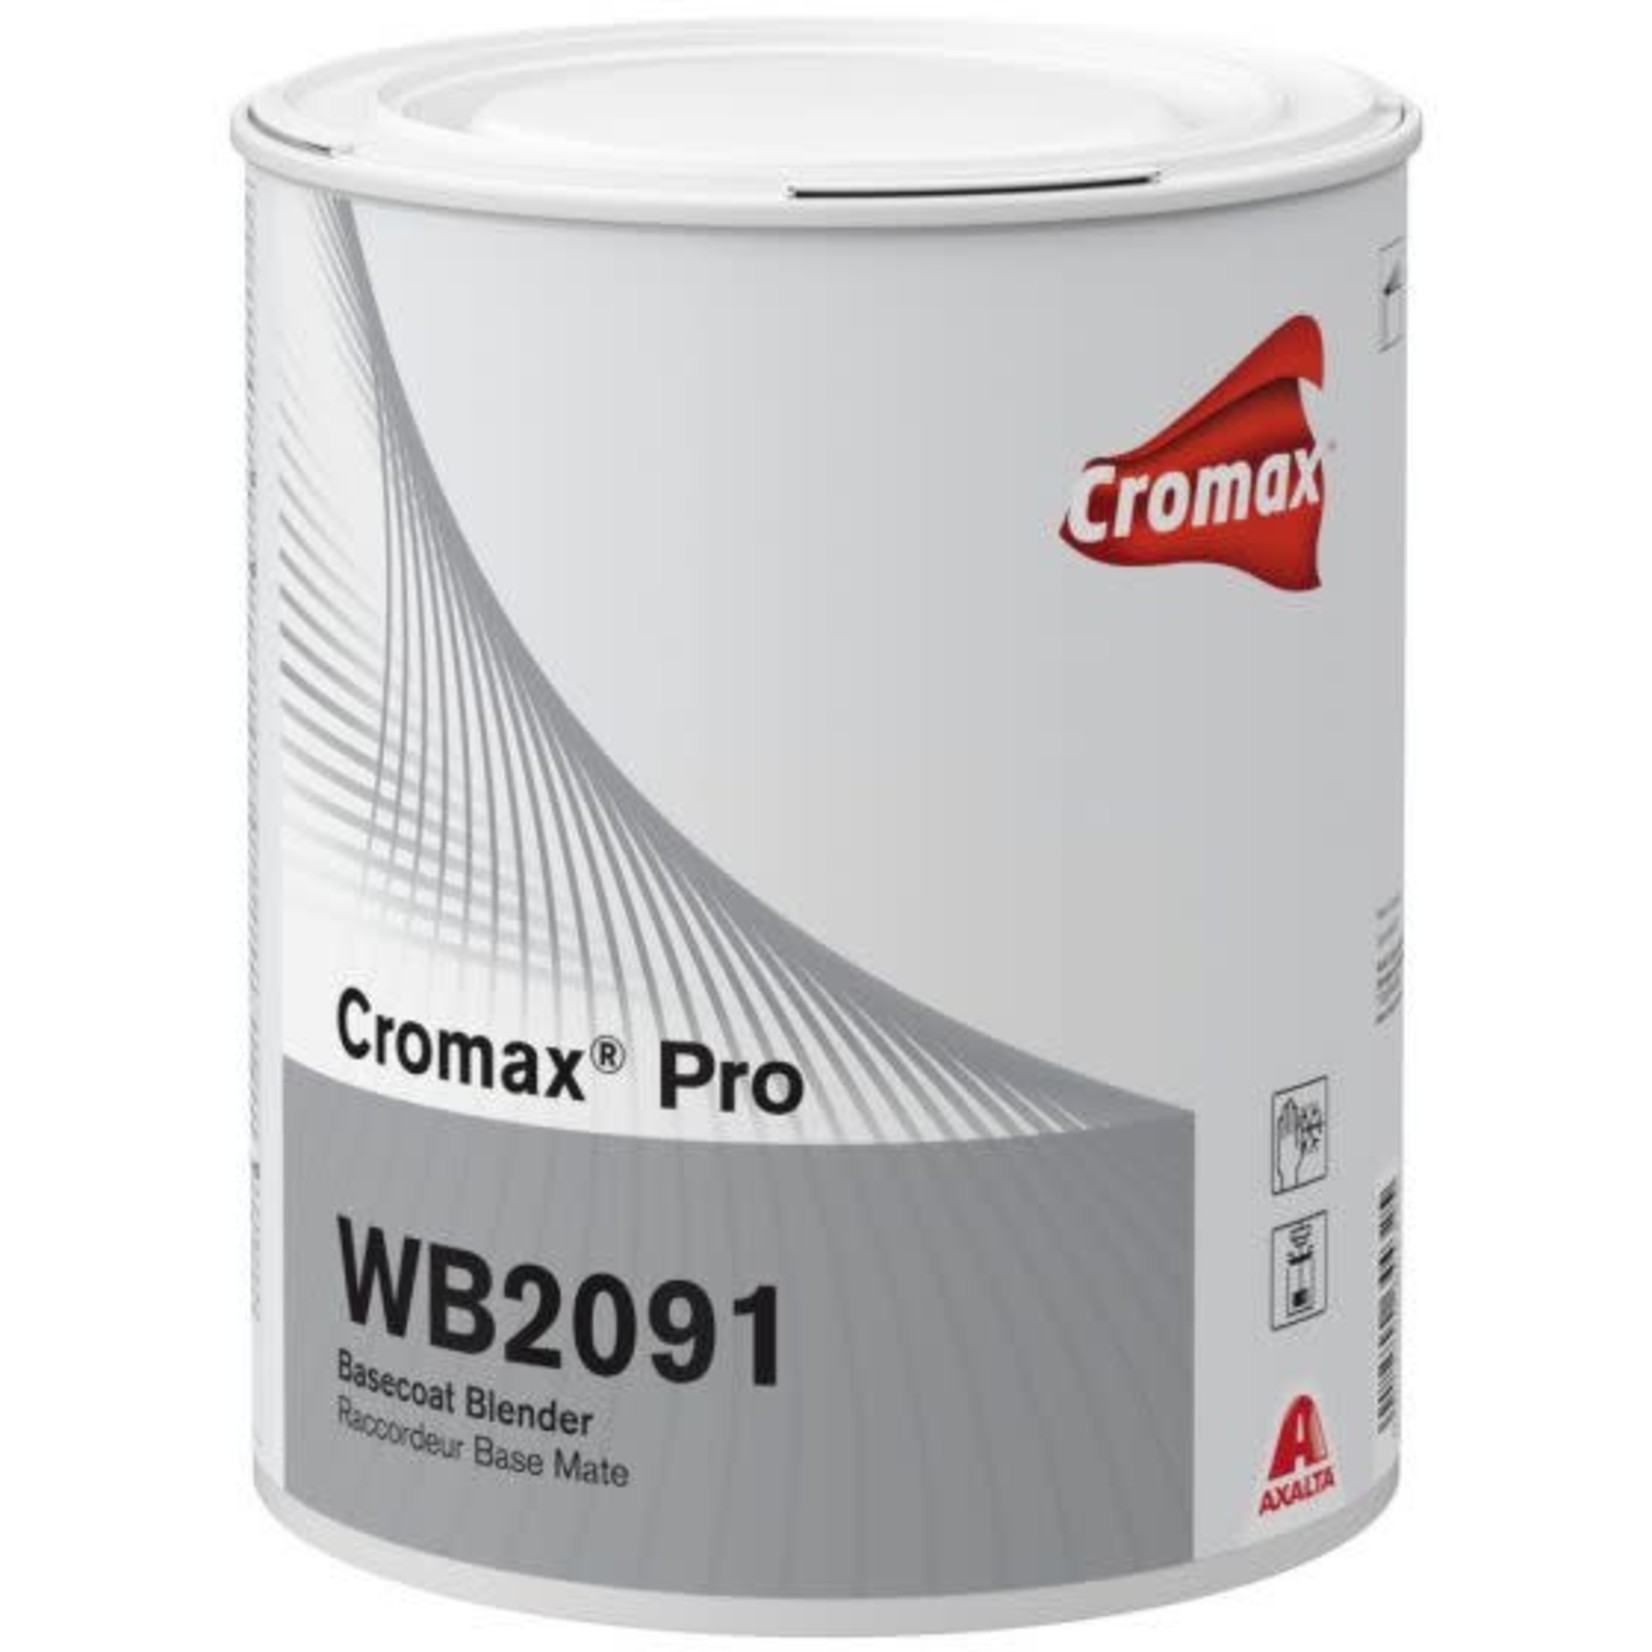 Axalta Cromax Pro Blender